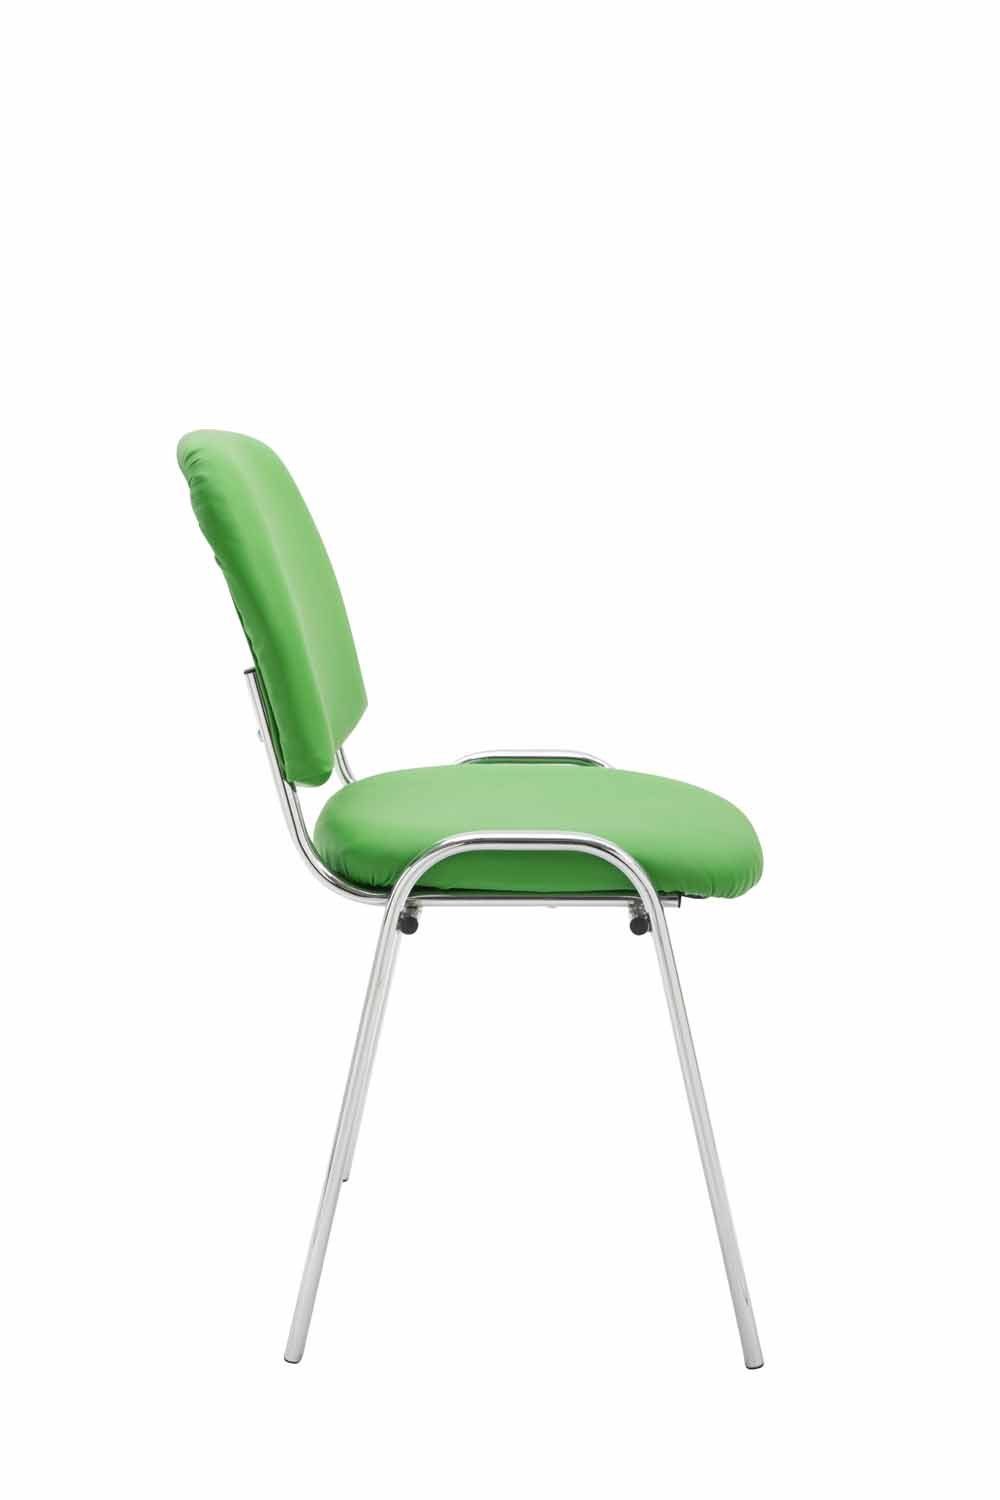 Kunstleder, Chrom CLP & stapelbar grün Design Besucherstuhl modernes Ken